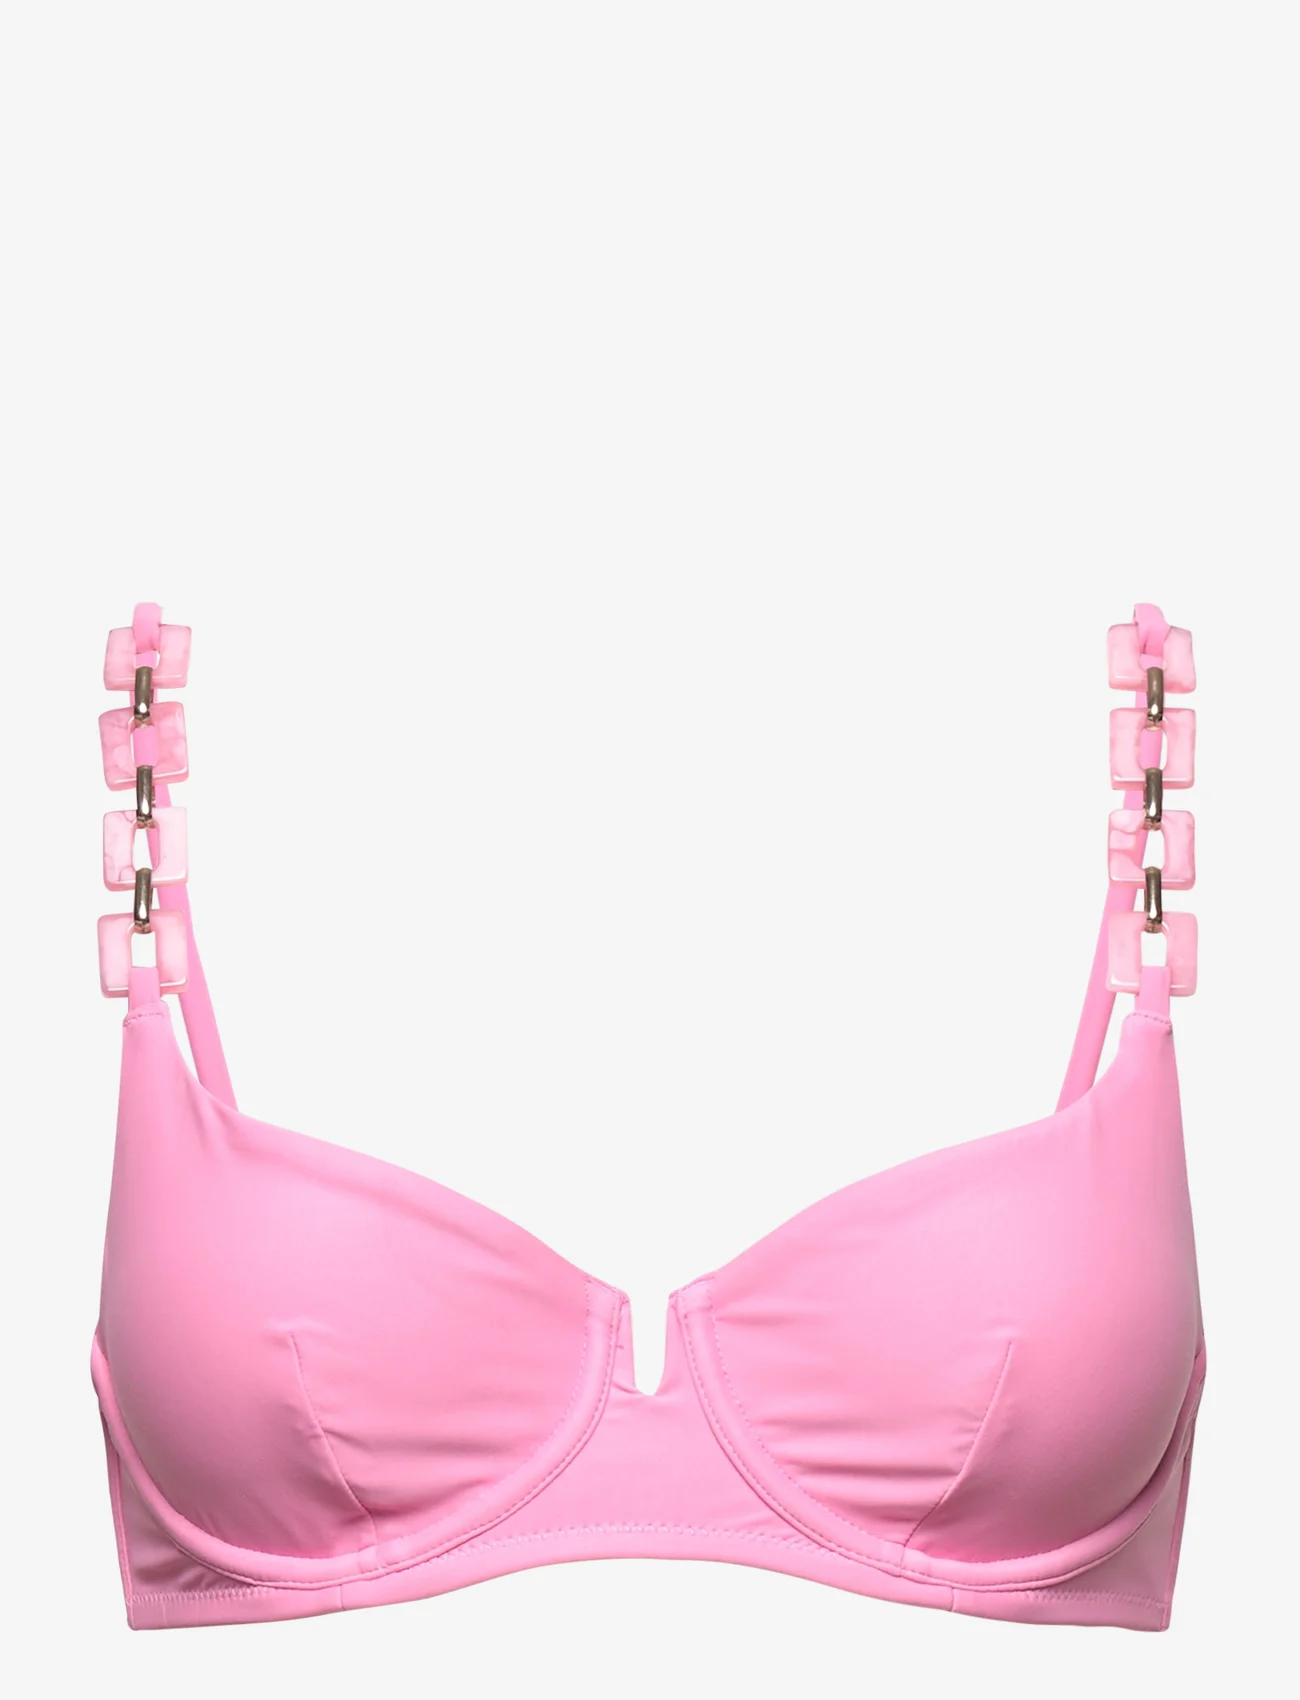 Hunkemöller - Aruba uf - stanik z fiszbinami bikini - sea pink - 0